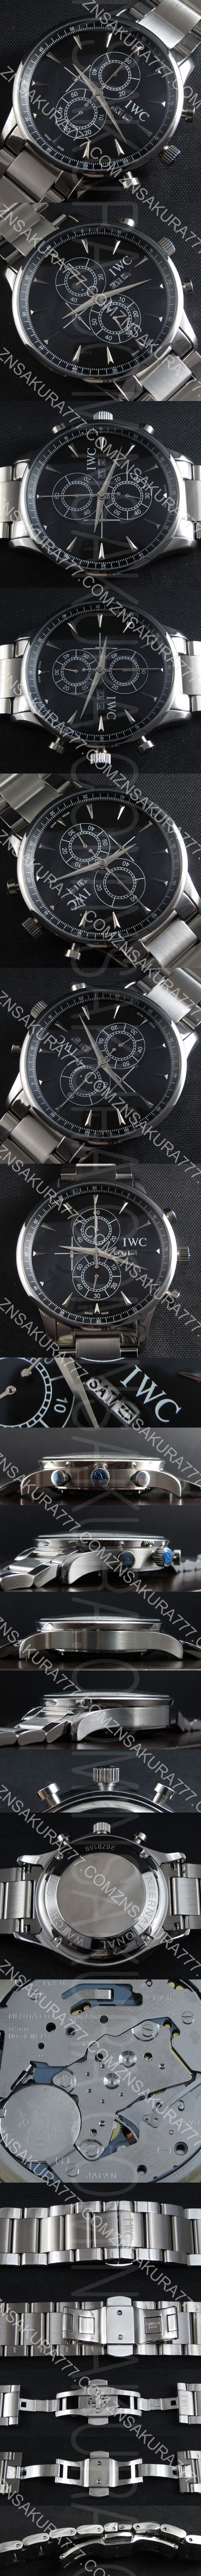 IWC腕時計の説明